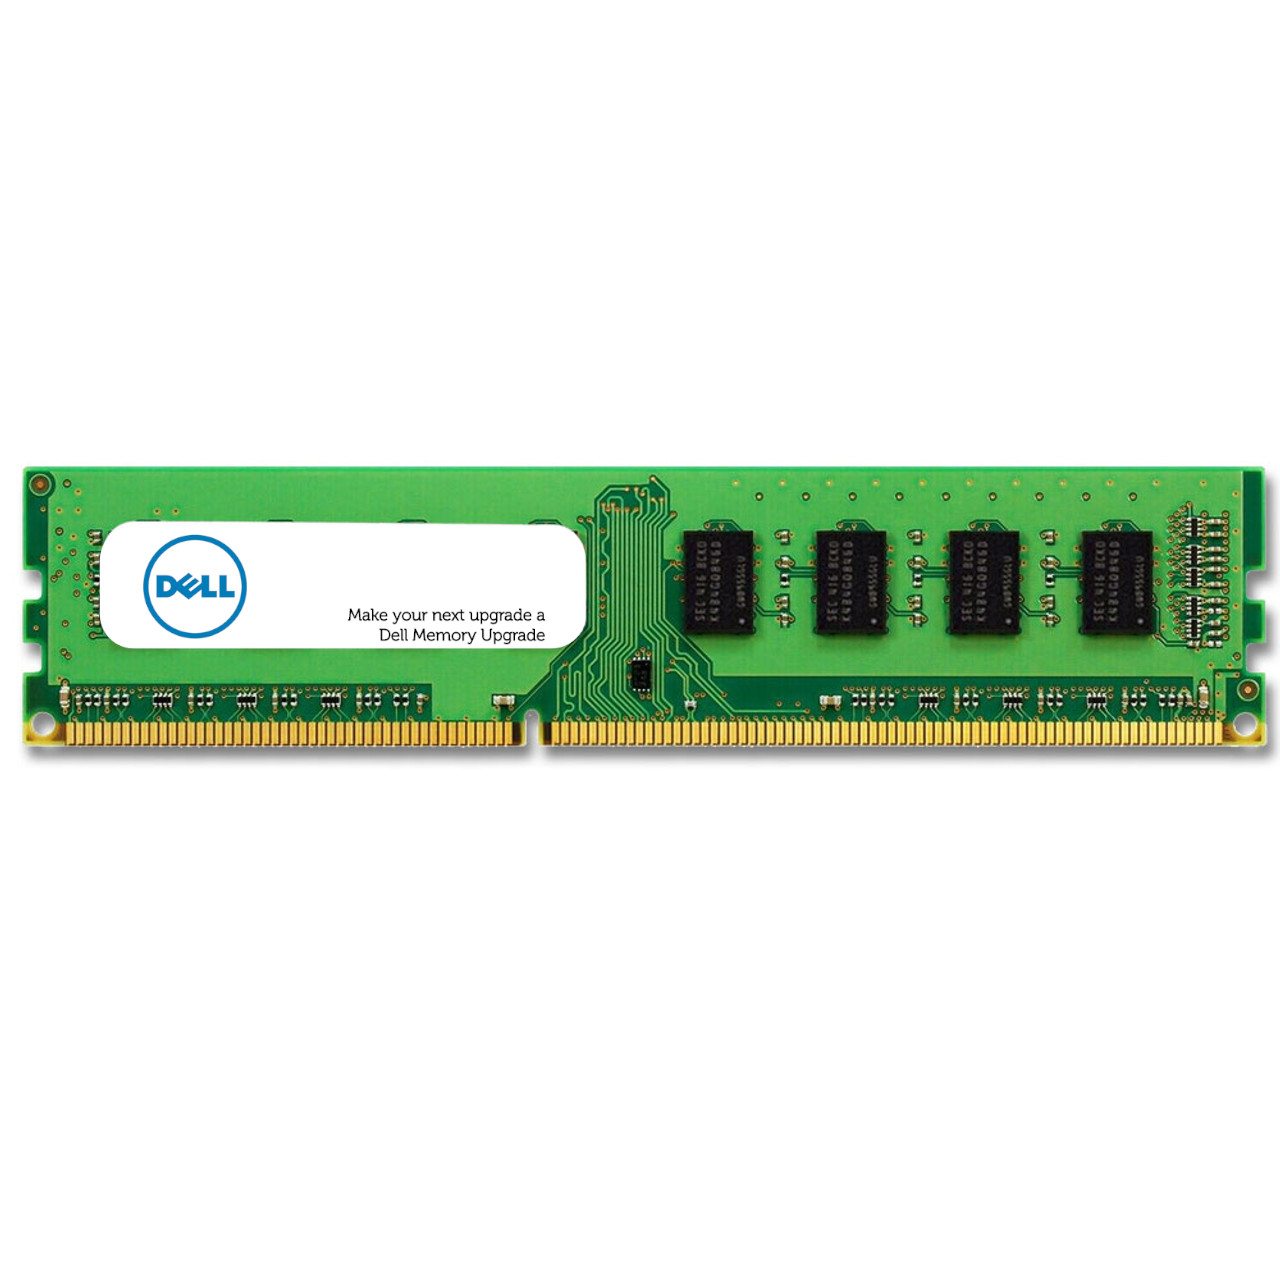 eBay*  Dell Memory SNP531R8C/4G A7398800 4GB 1Rx8 DDR3 UDIMM 1600MHz RAM